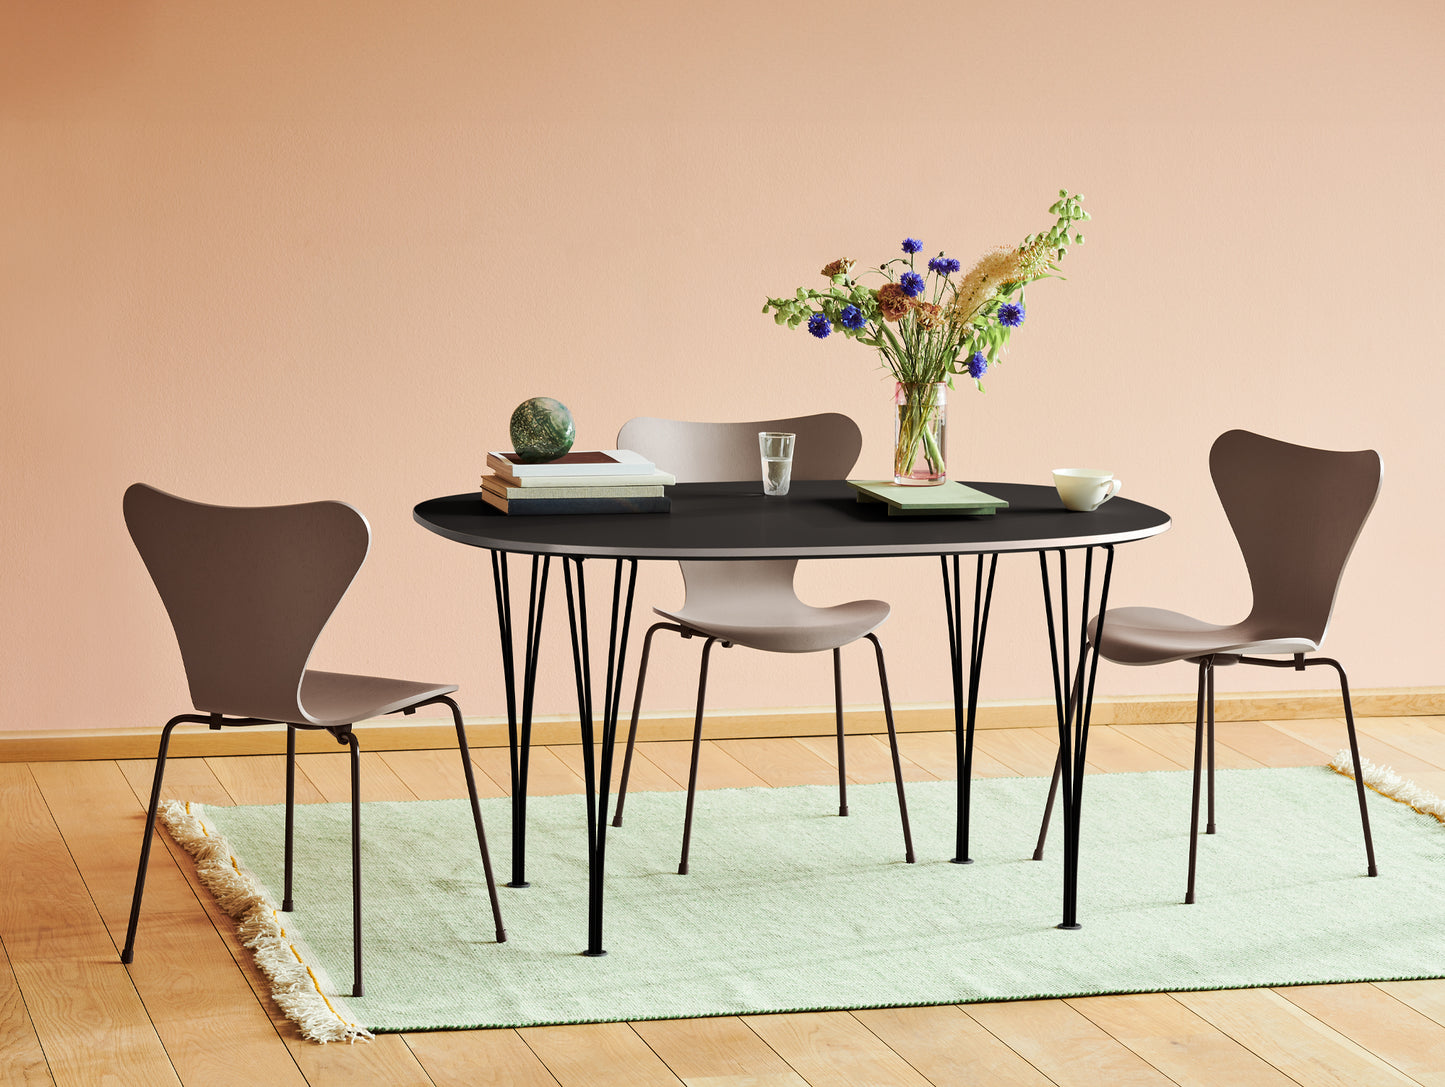 Series 7™ 3107 Dining Chair by Fritz Hansen - Deep Clay Coloured Ash Veneer Shell / Brown Bronze Steel